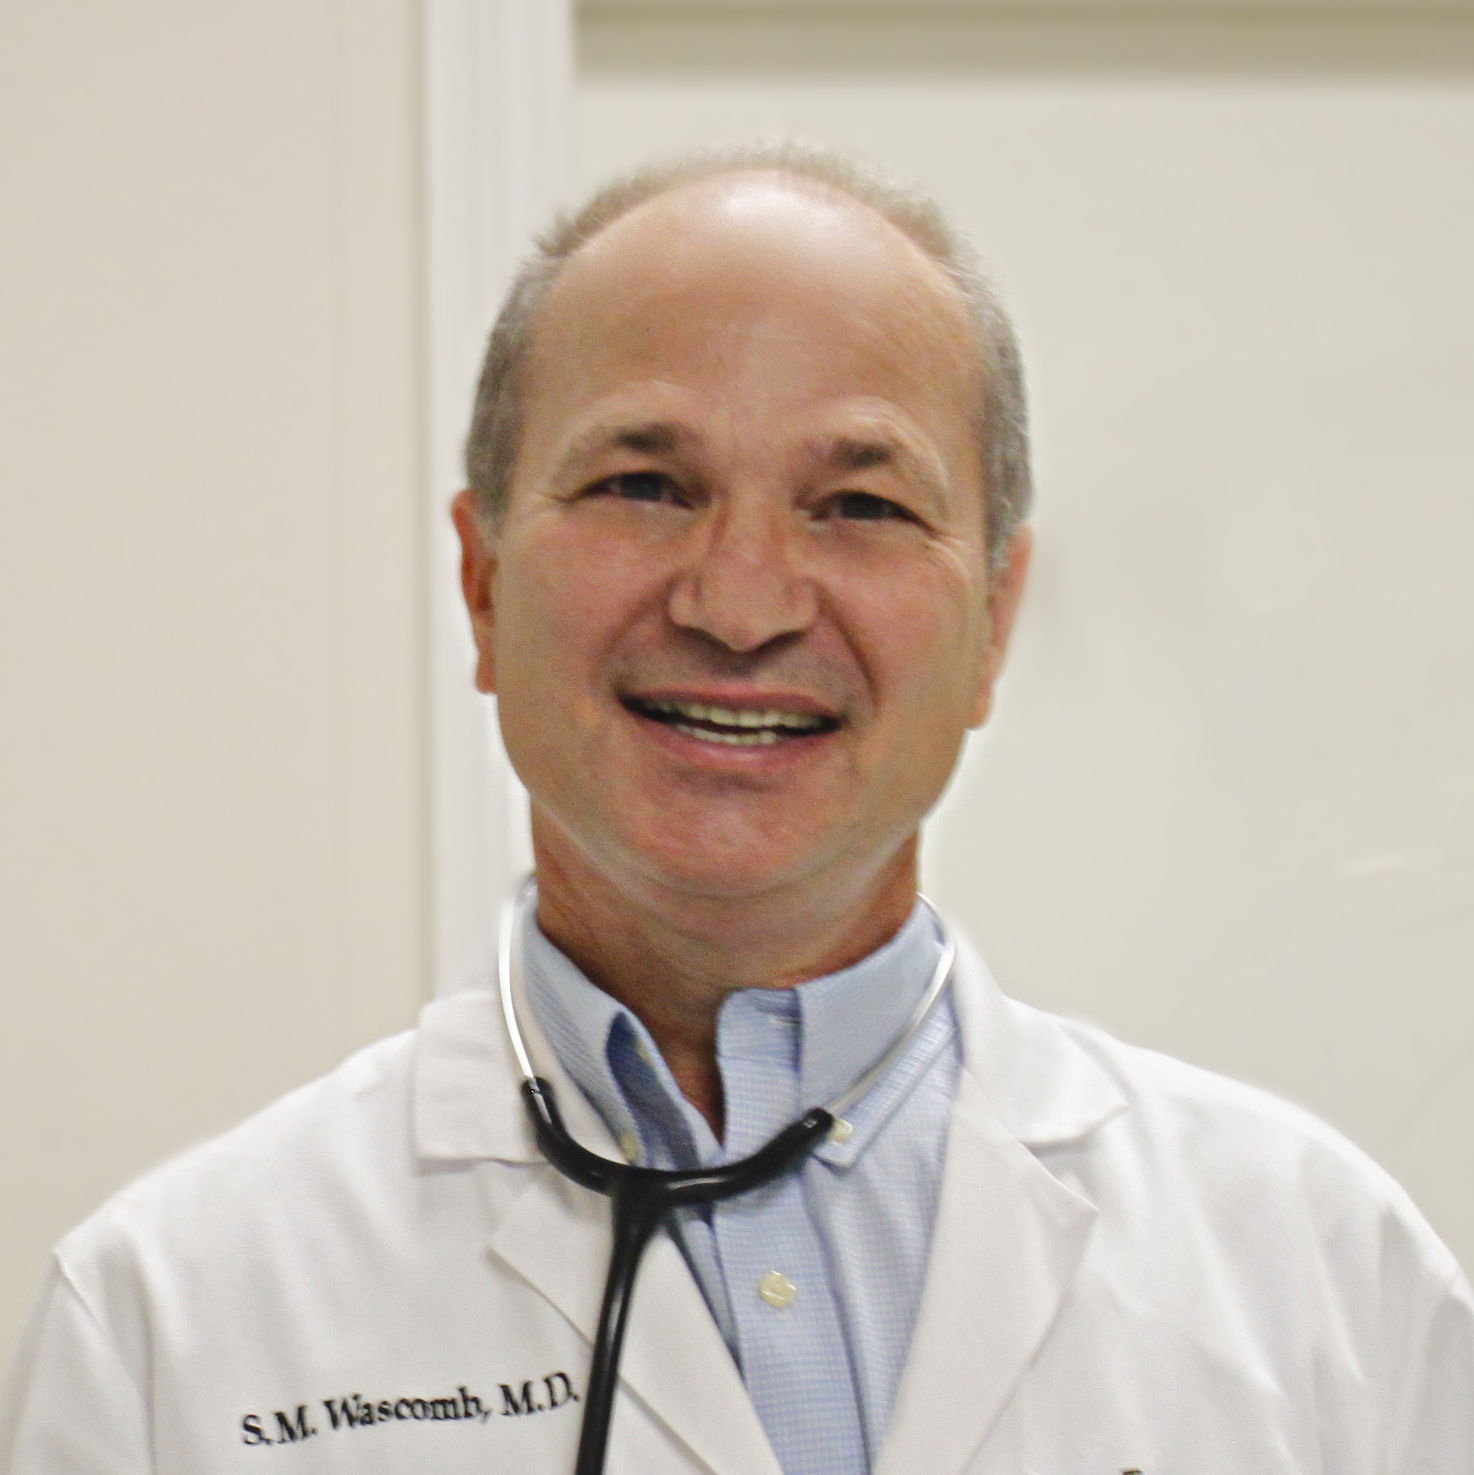 Dr. Stephen Marc Wascomb M.D.